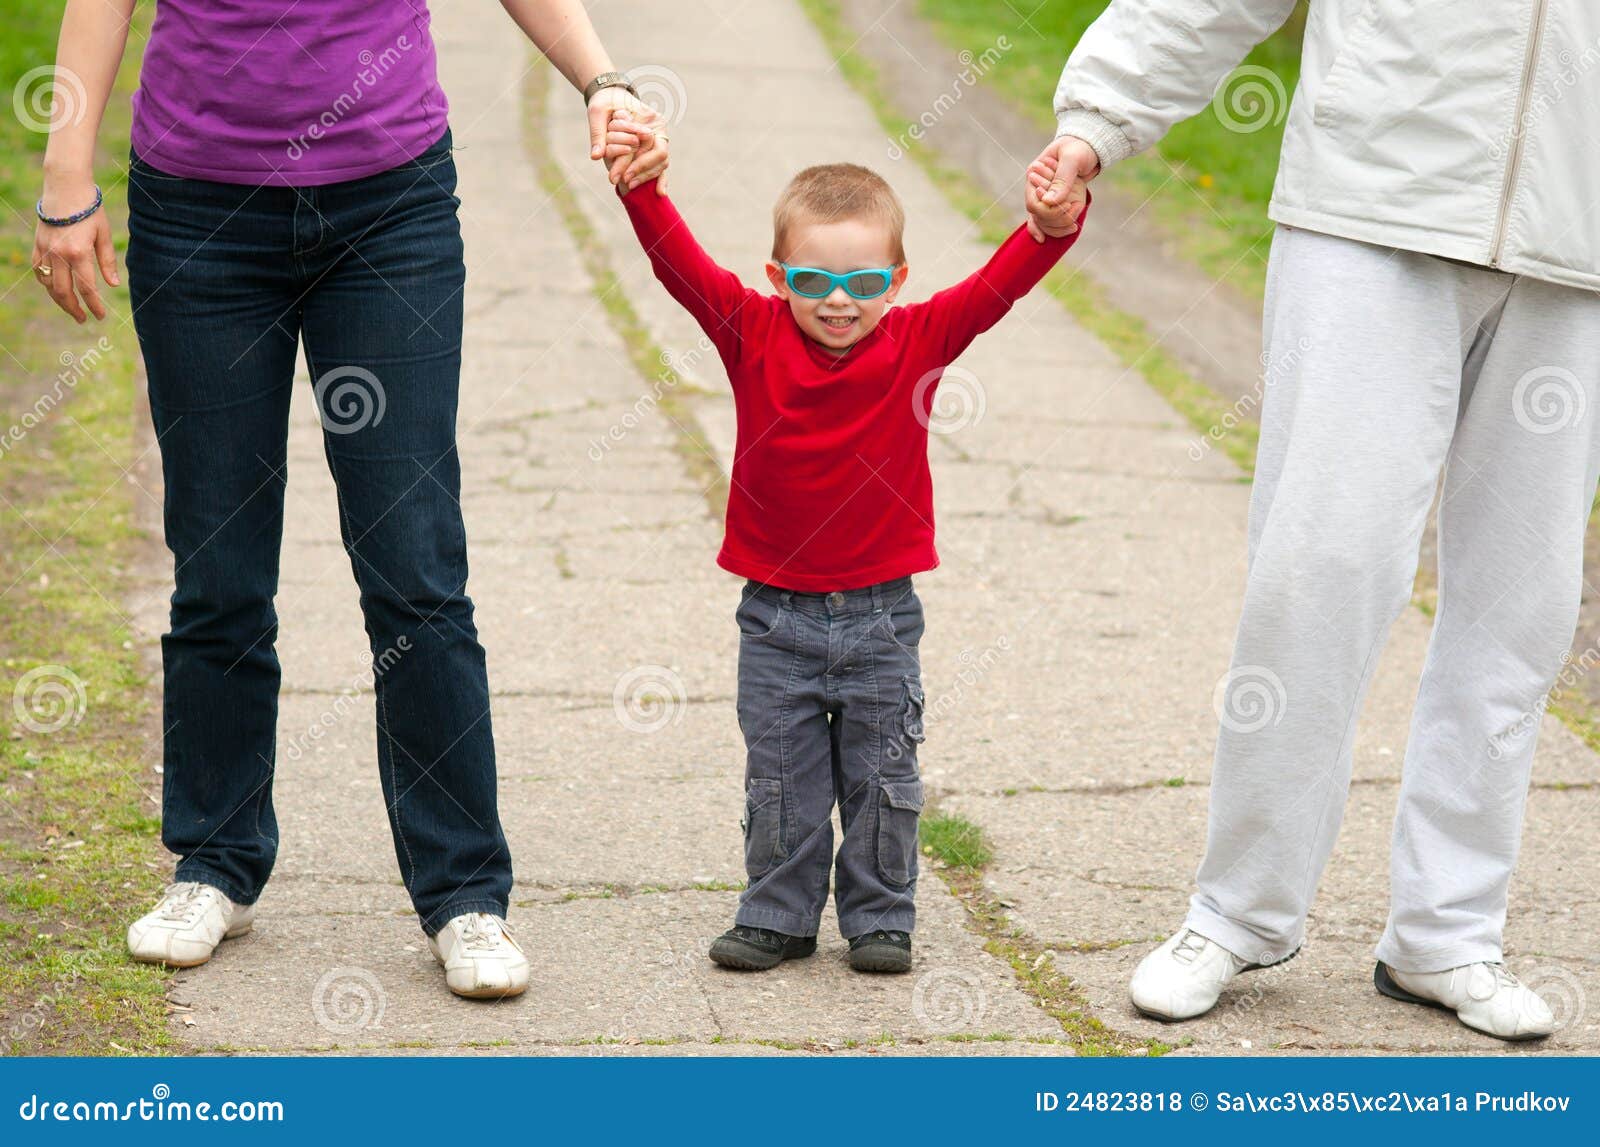 little-boy-holding-hands-his-parents-24823818.jpg